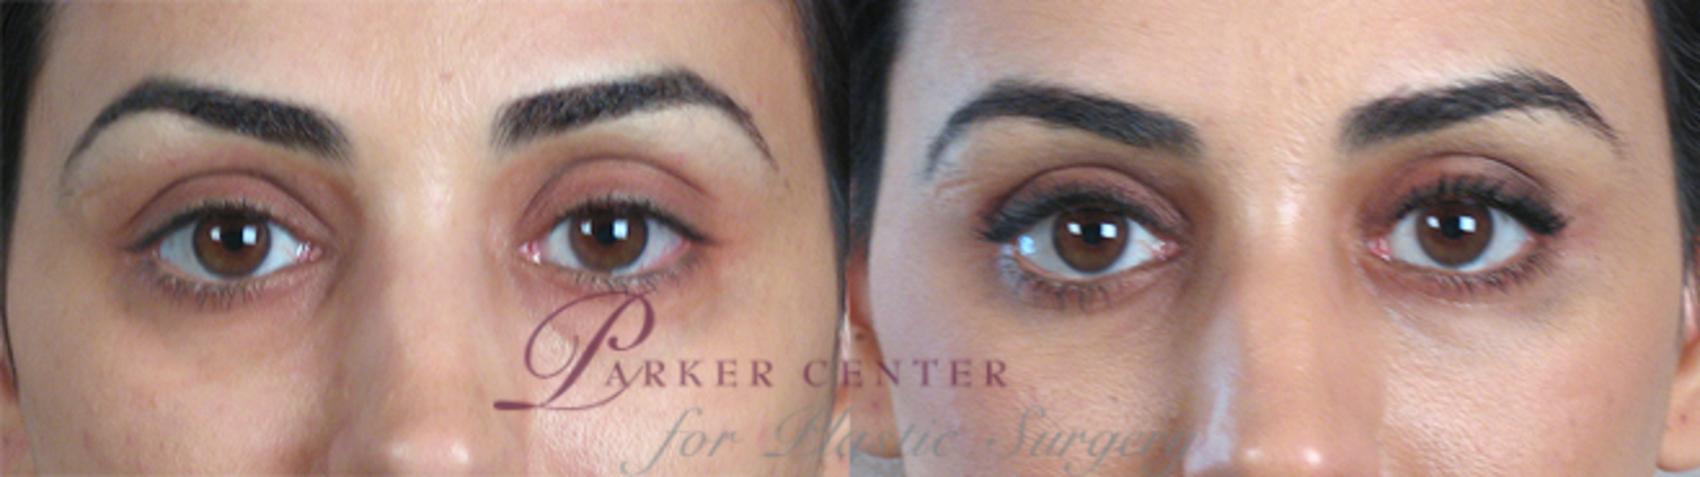 Eyelid Lift Case 69 Before & After View #1 | Paramus, NJ | Parker Center for Plastic Surgery